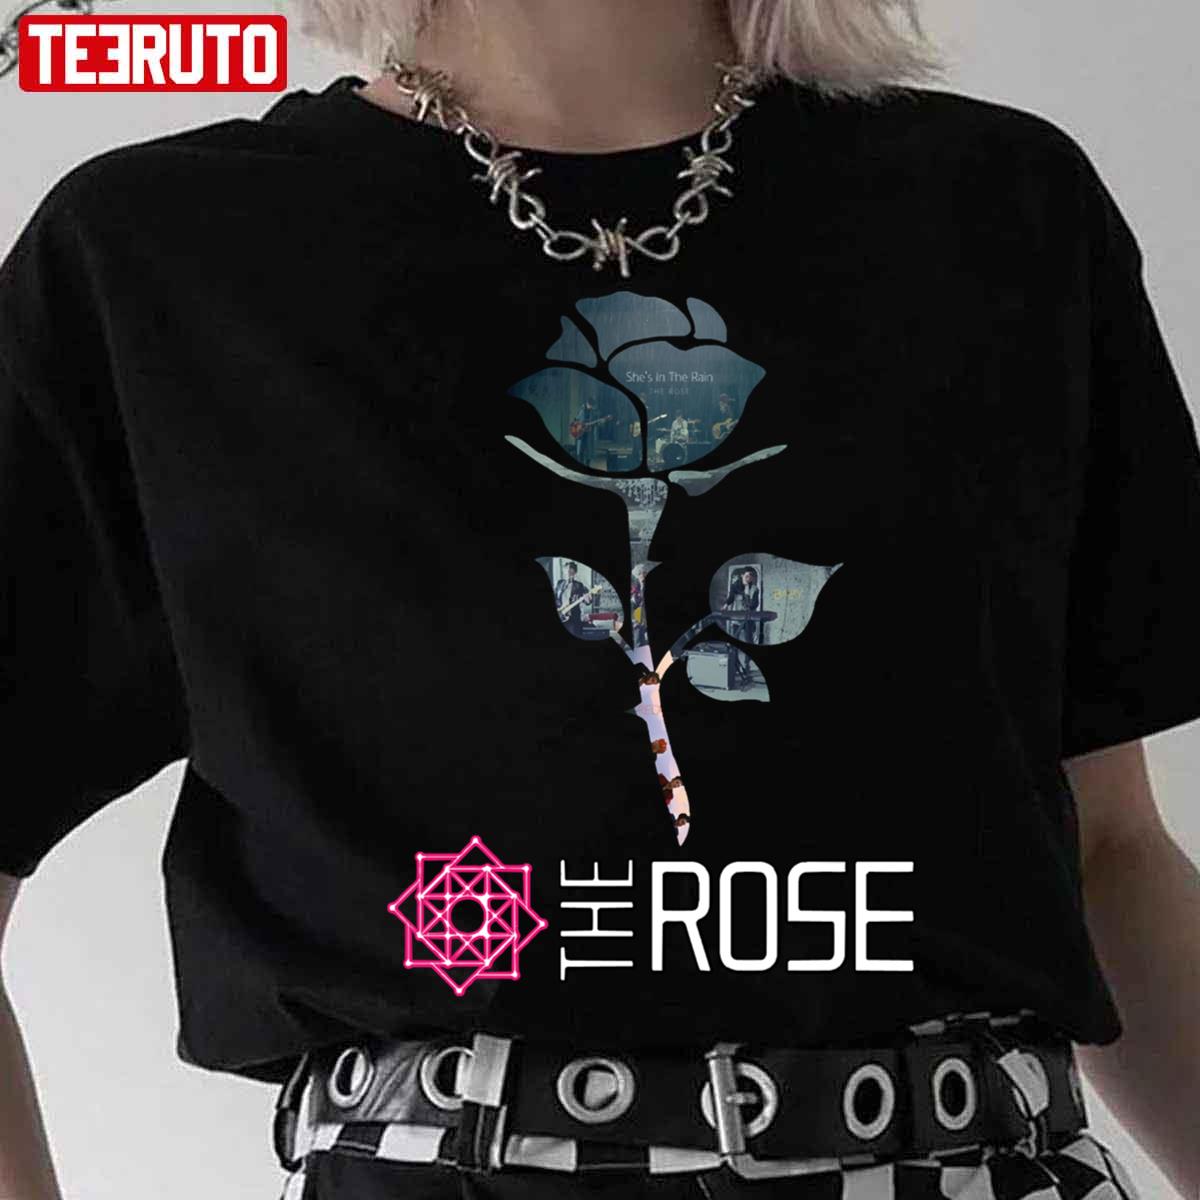 The Rose BTS Unisex T-Shirt